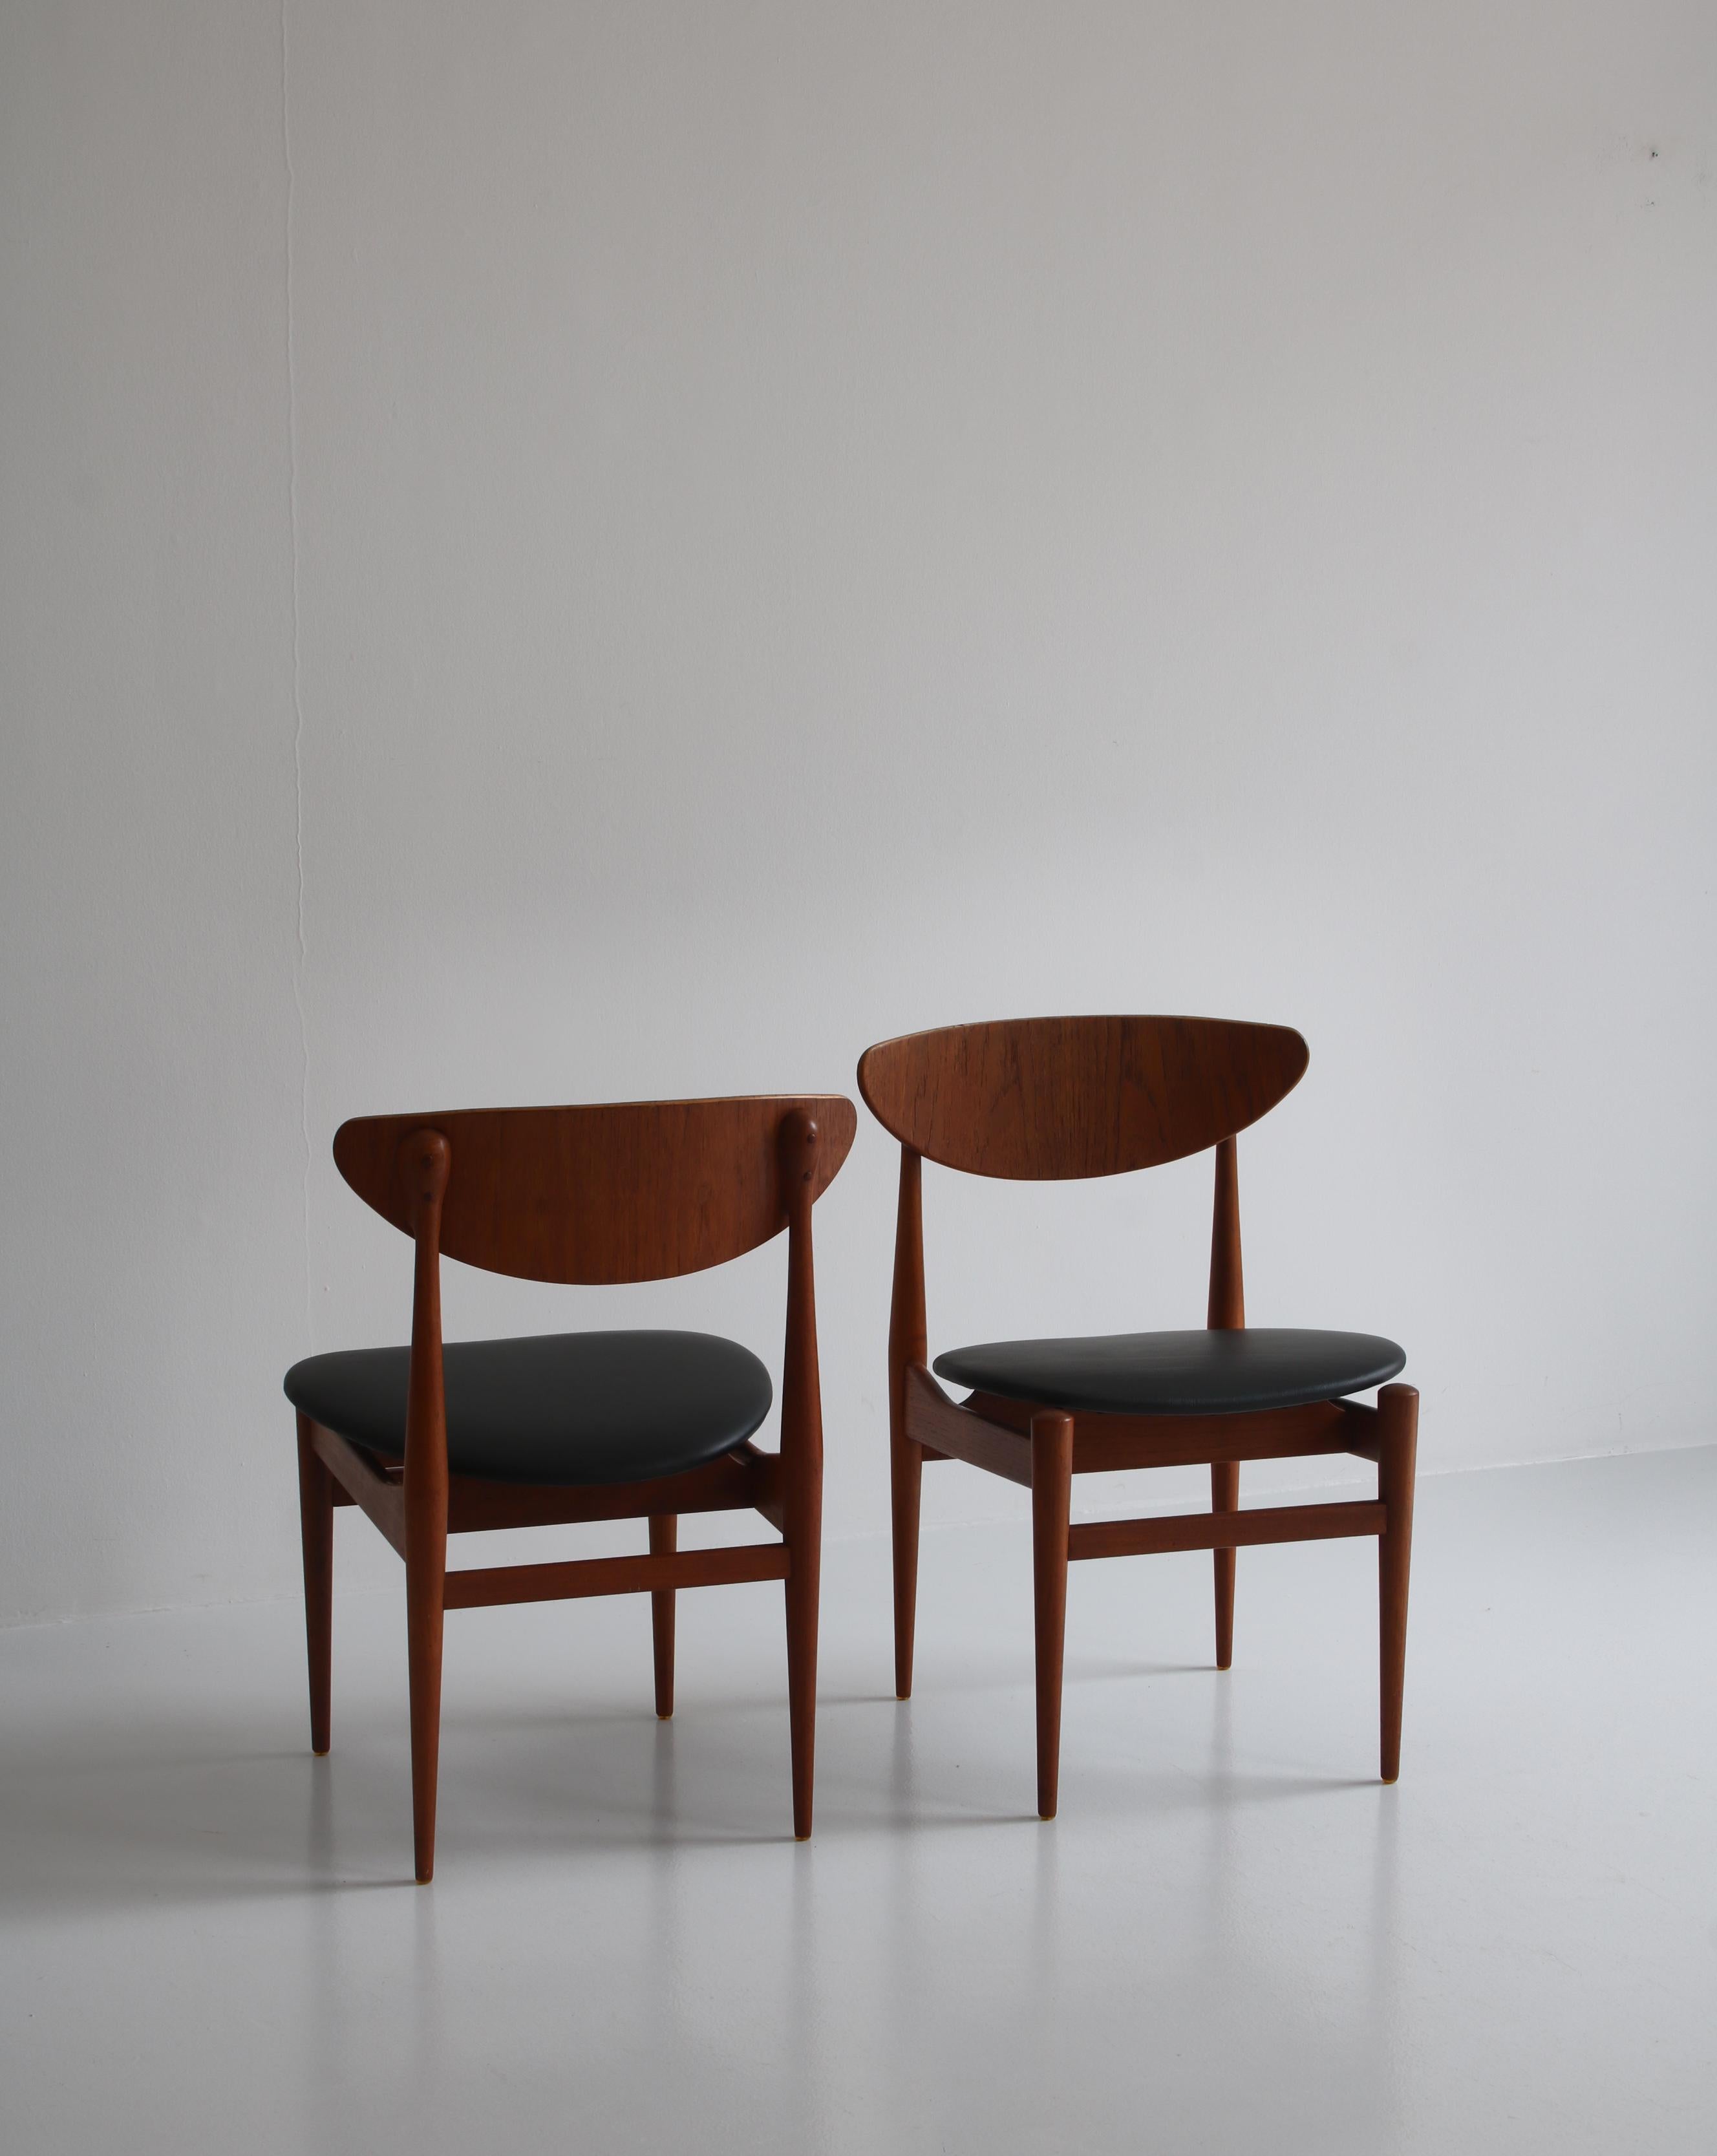 Scandinavian Modern Set of 8 Danish Modern Dining Chairs Teak and Black Leather by Inge Rubino, 1963